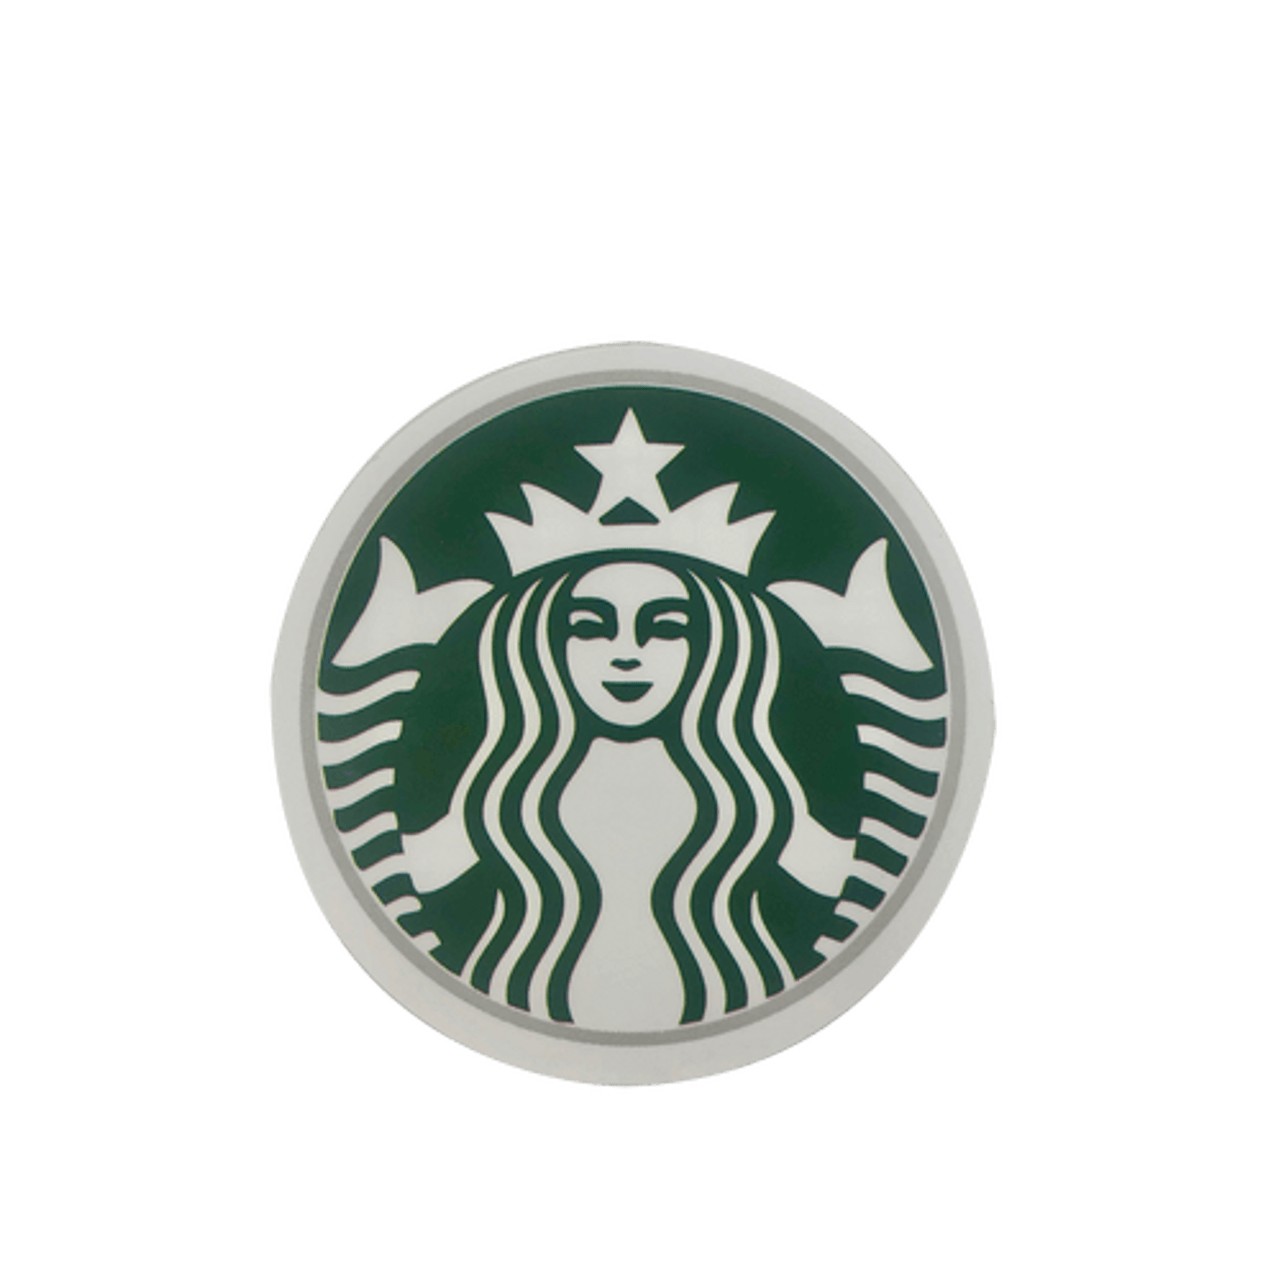 Starbucks Coffee Sticker